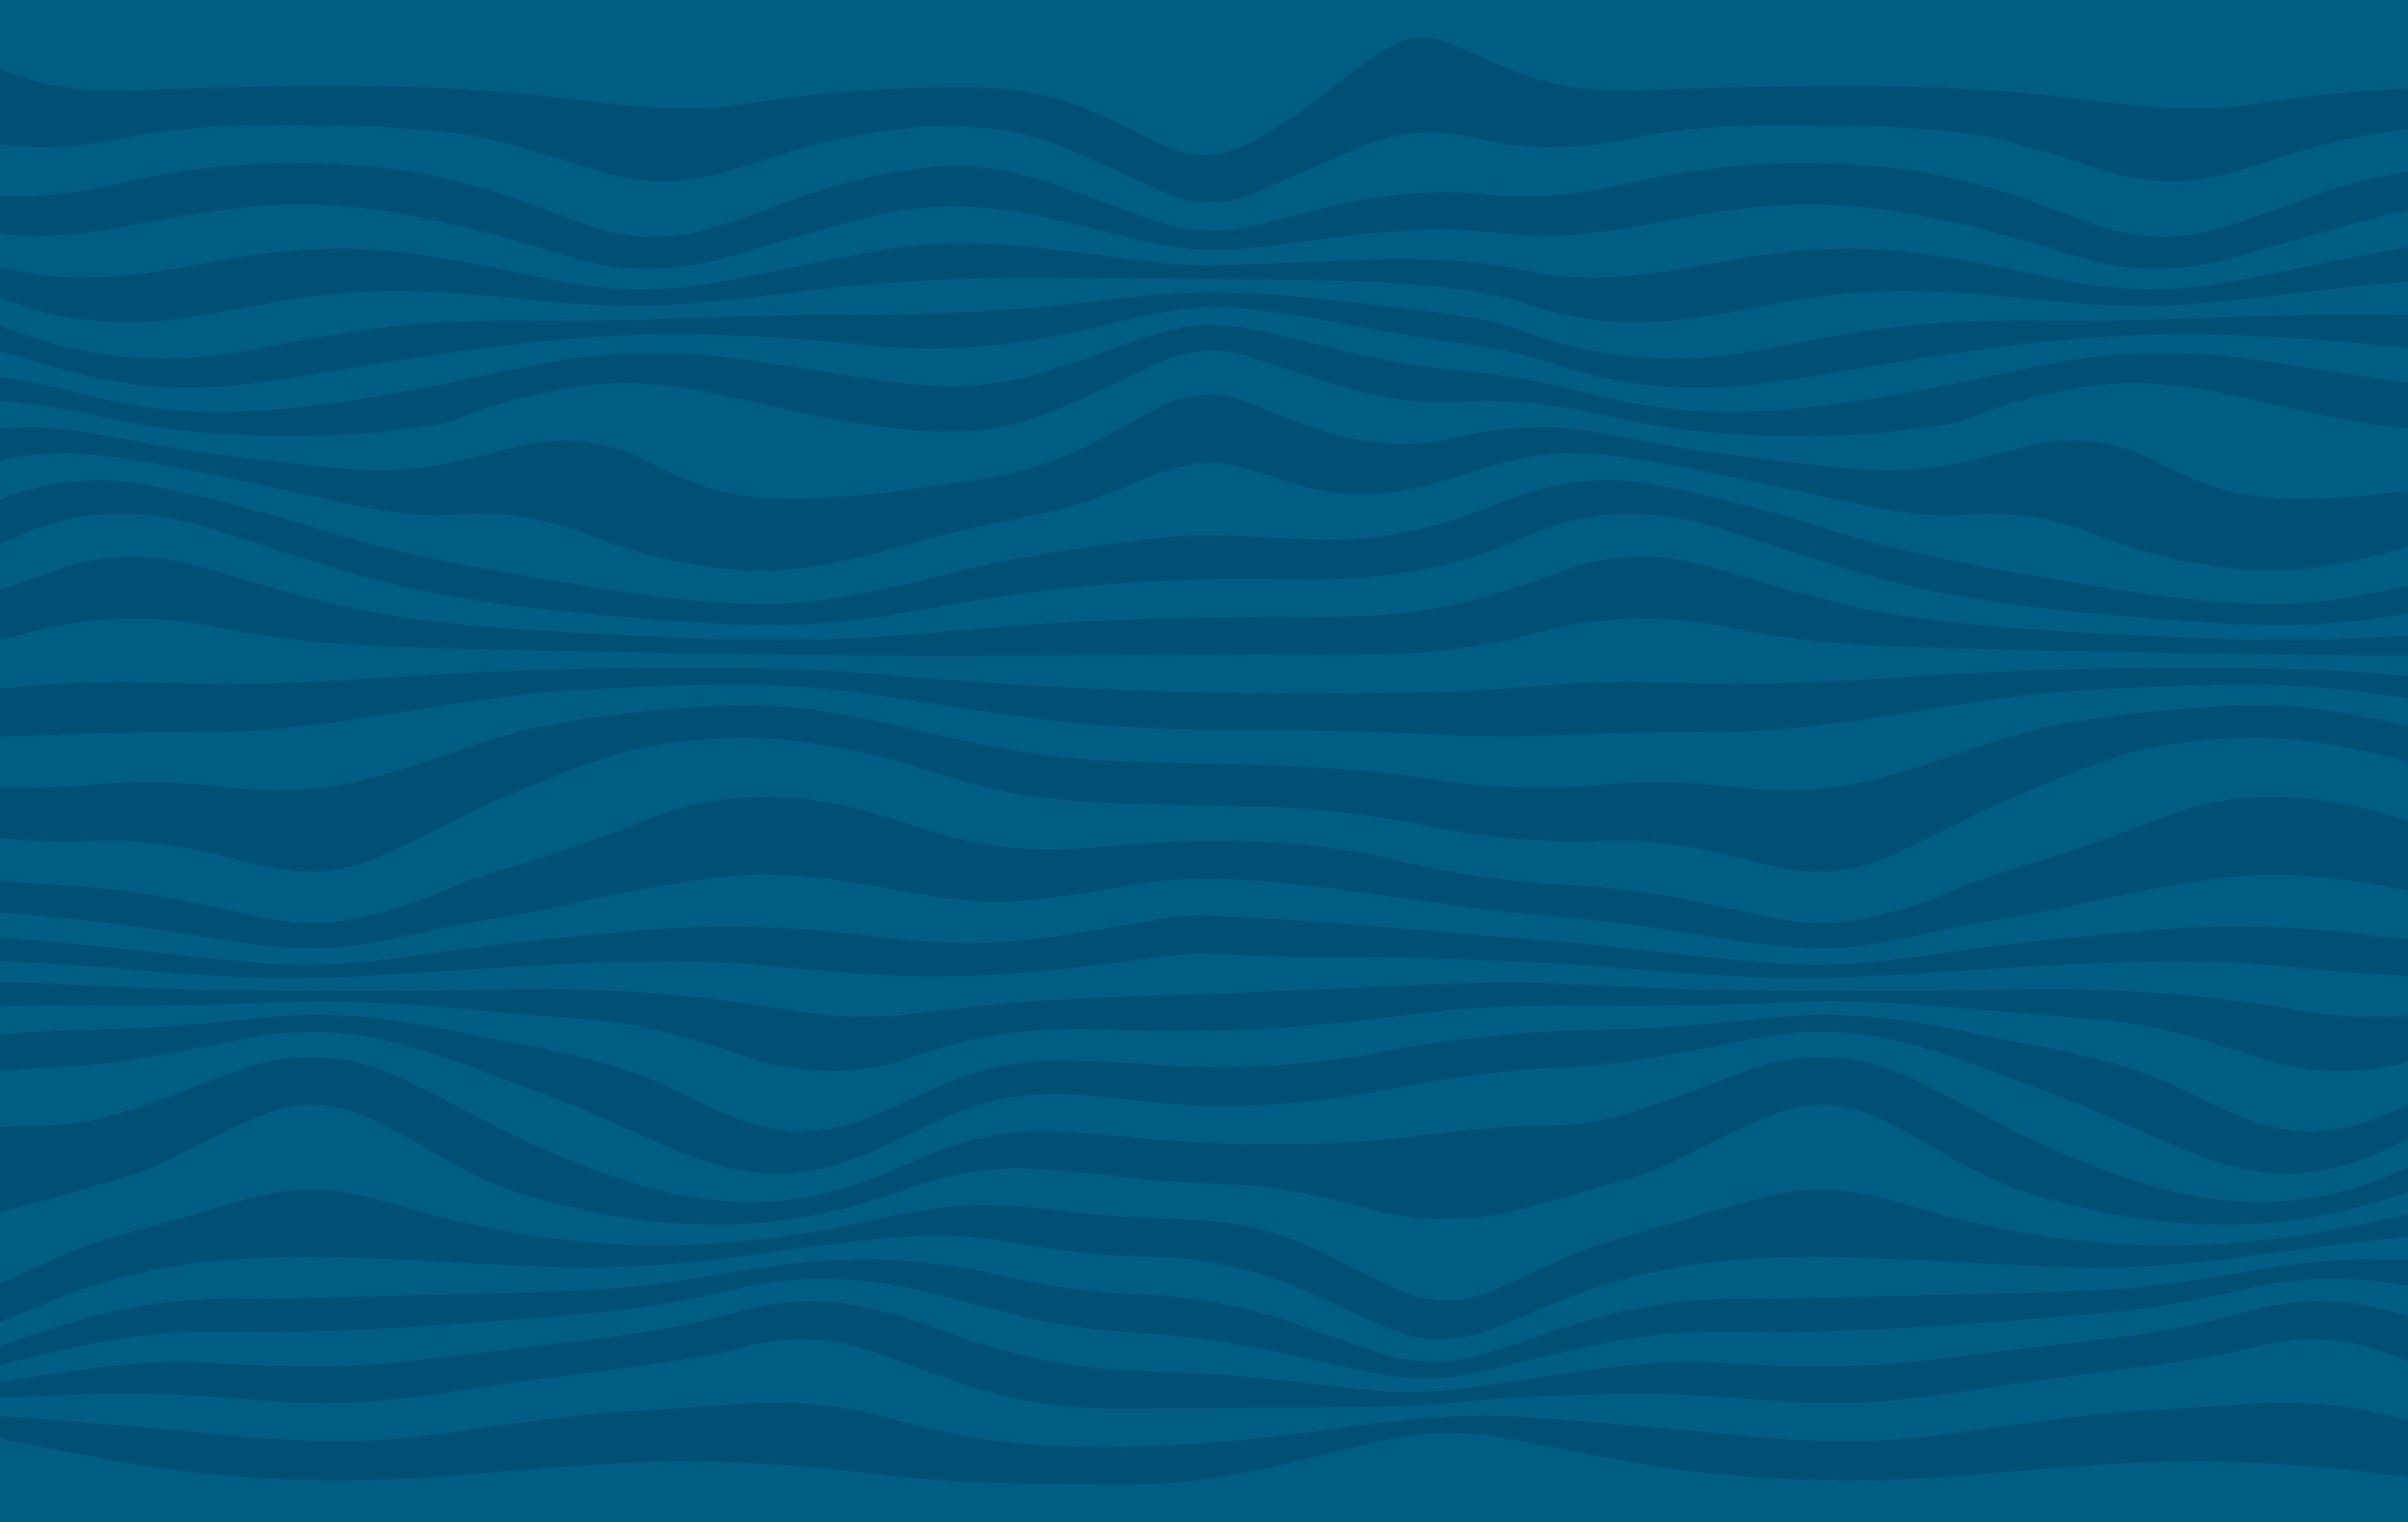 Blue wave motif pattern